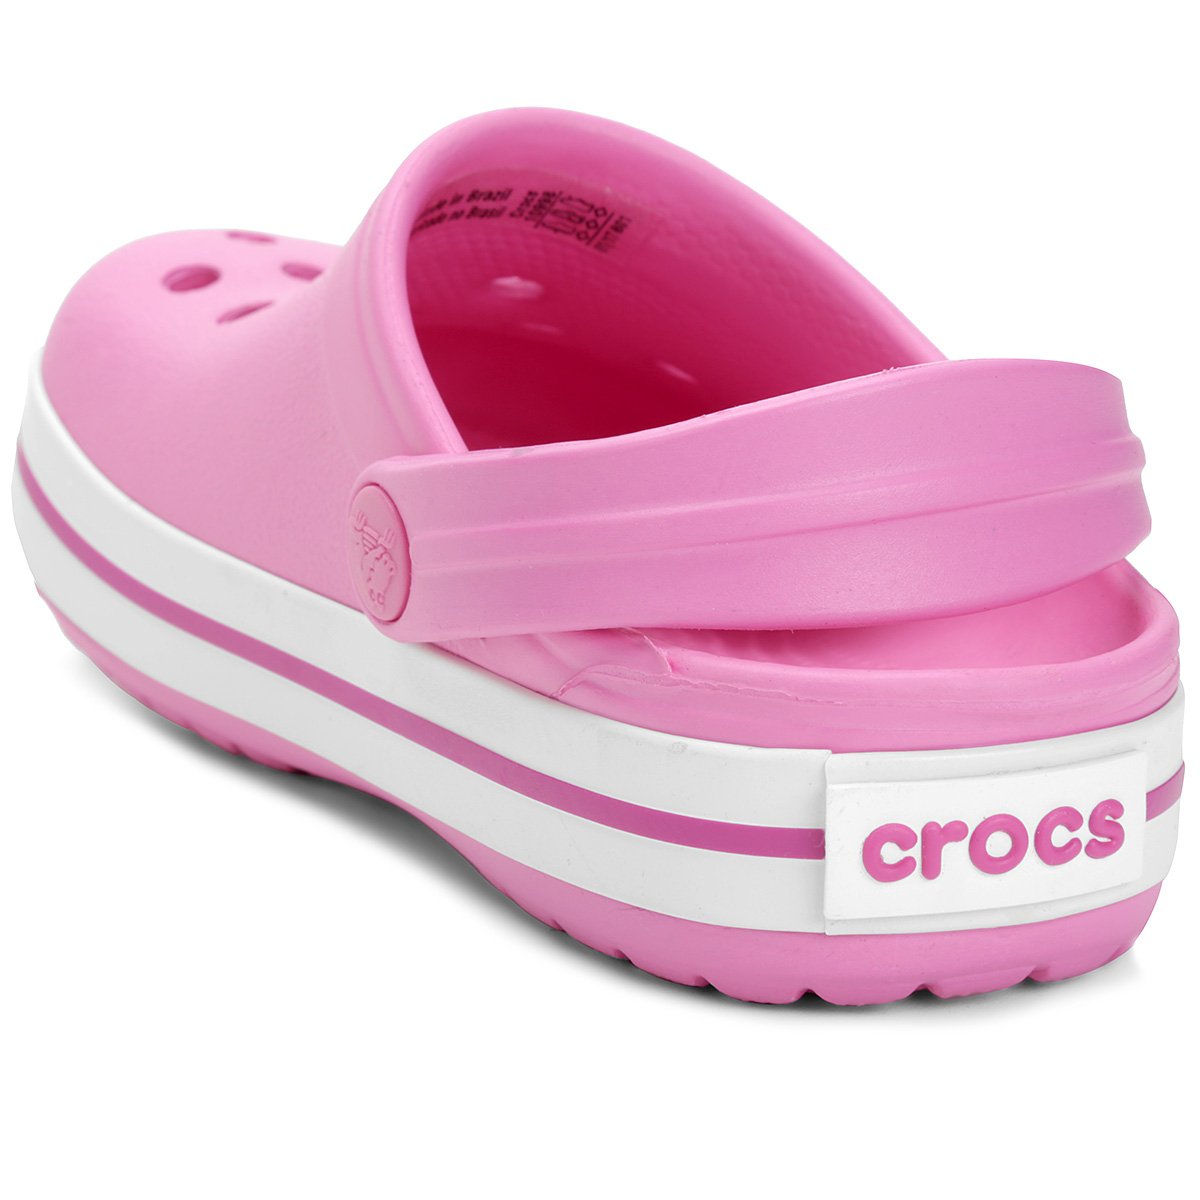 Crocs Pink Lemonade/White